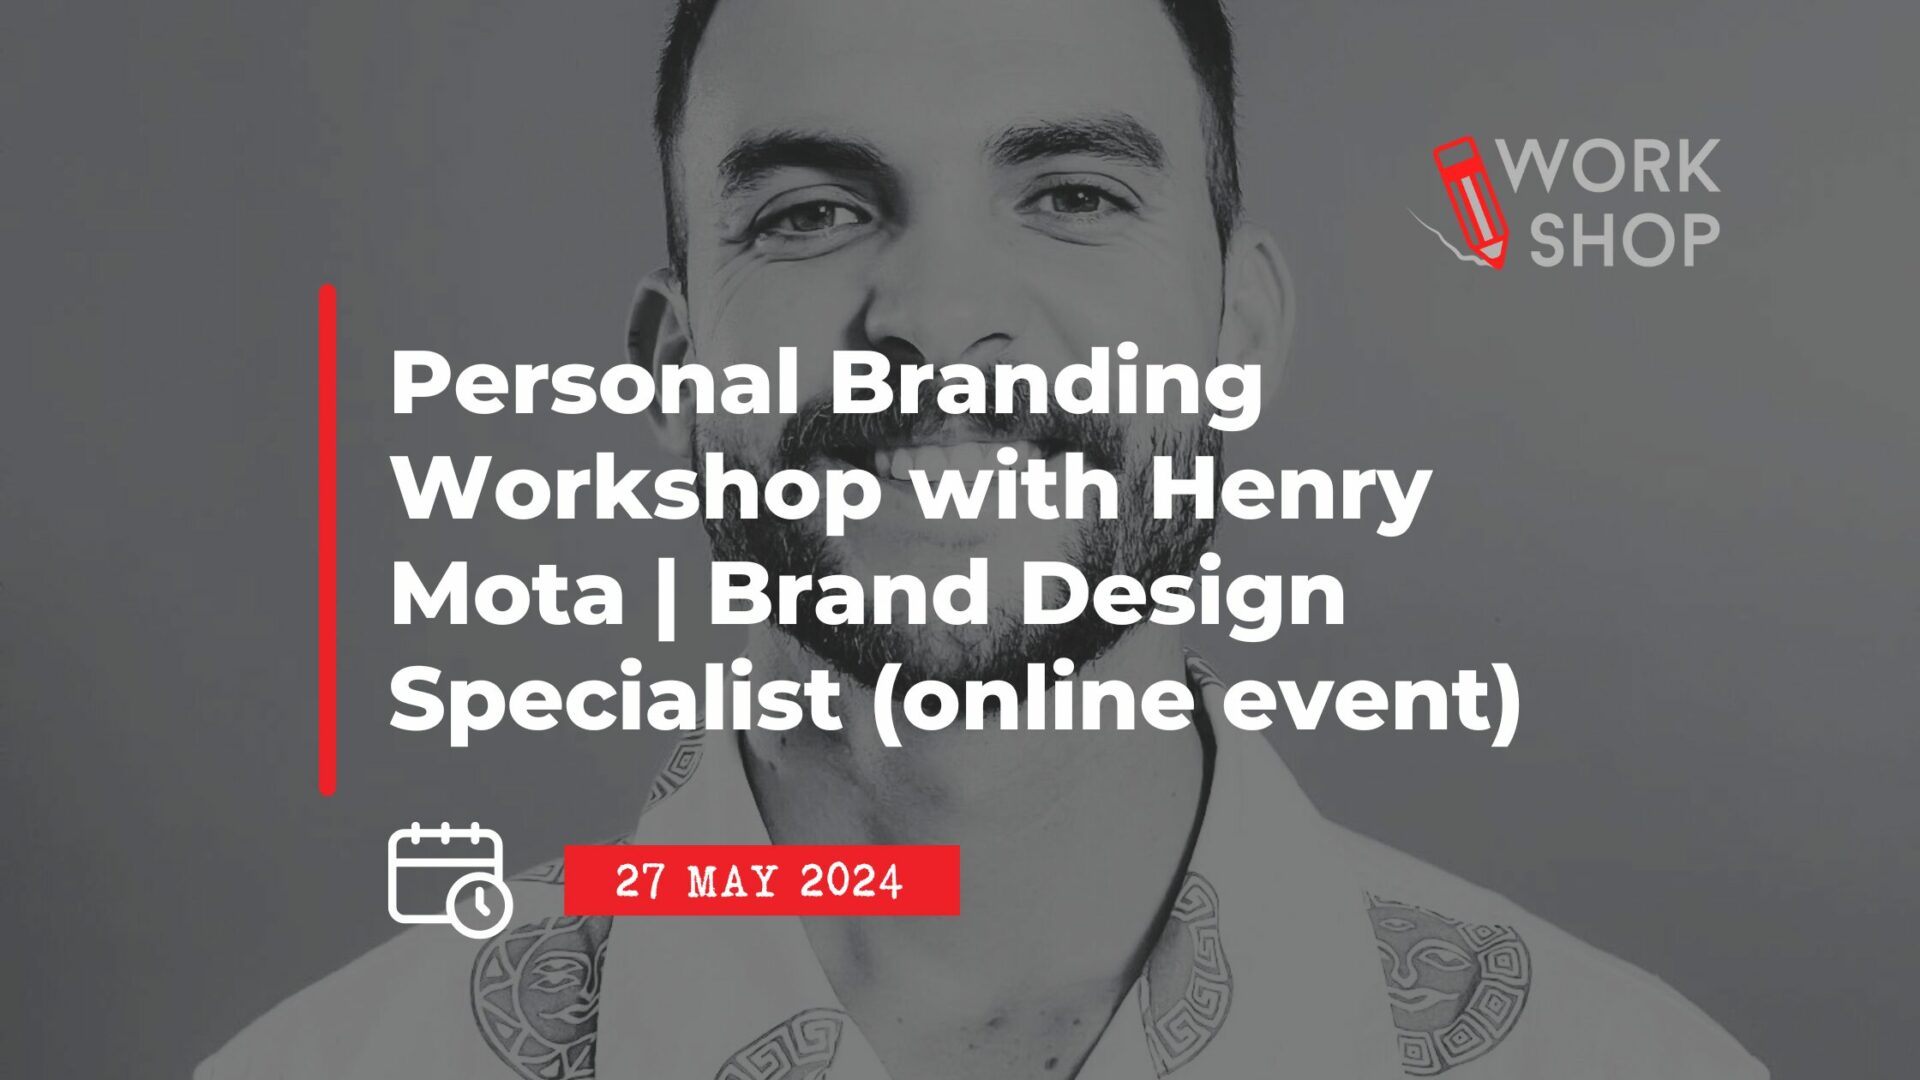 Personal Branding Workshop with Henry Mota | Brand Design Specialist (online event)